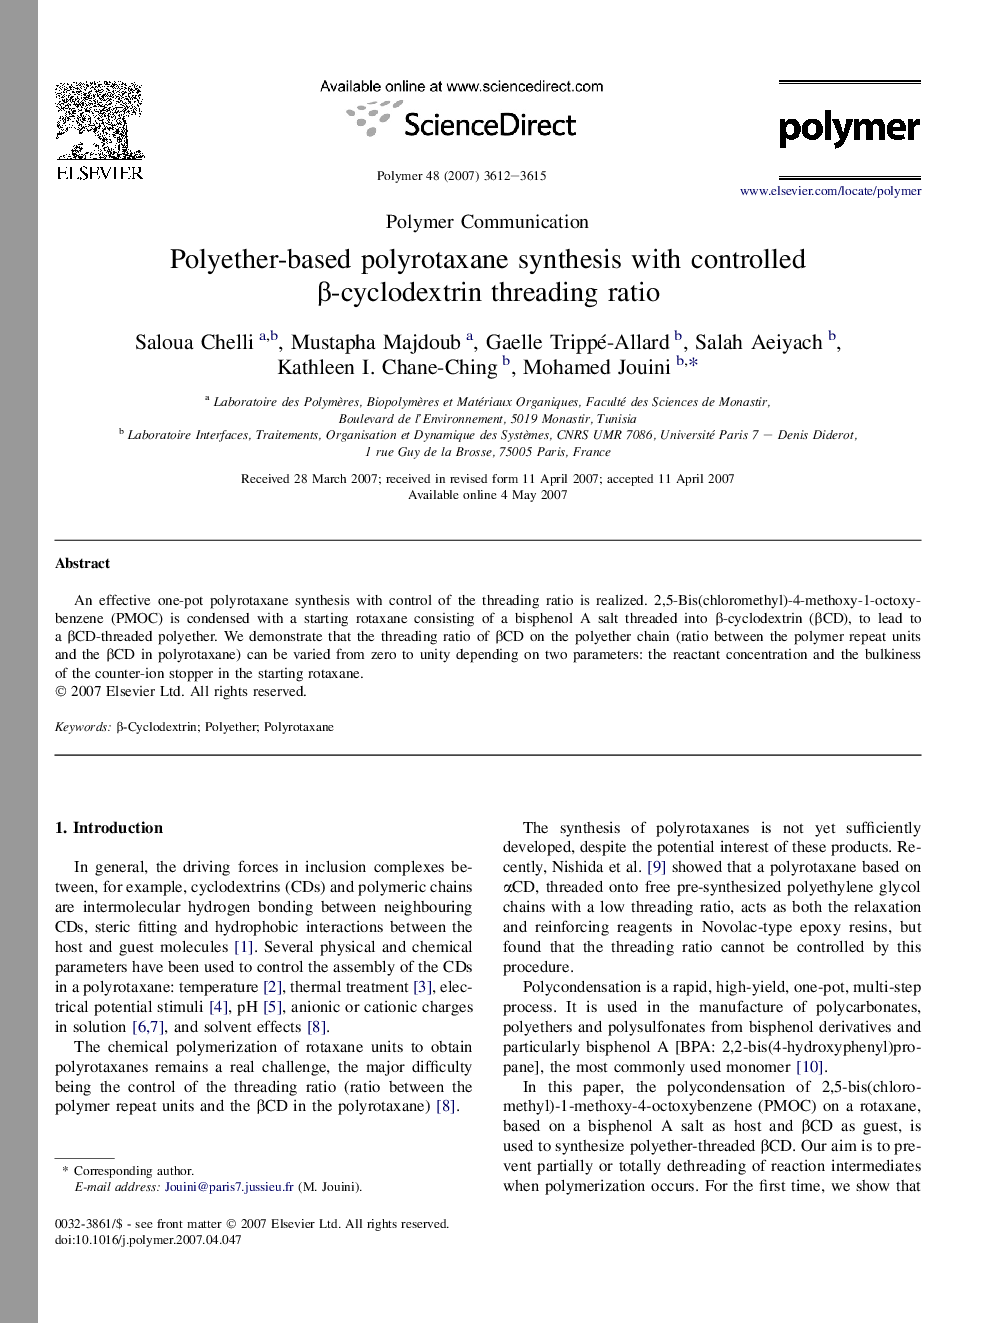 Polyether-based polyrotaxane synthesis with controlled Î²-cyclodextrin threading ratio